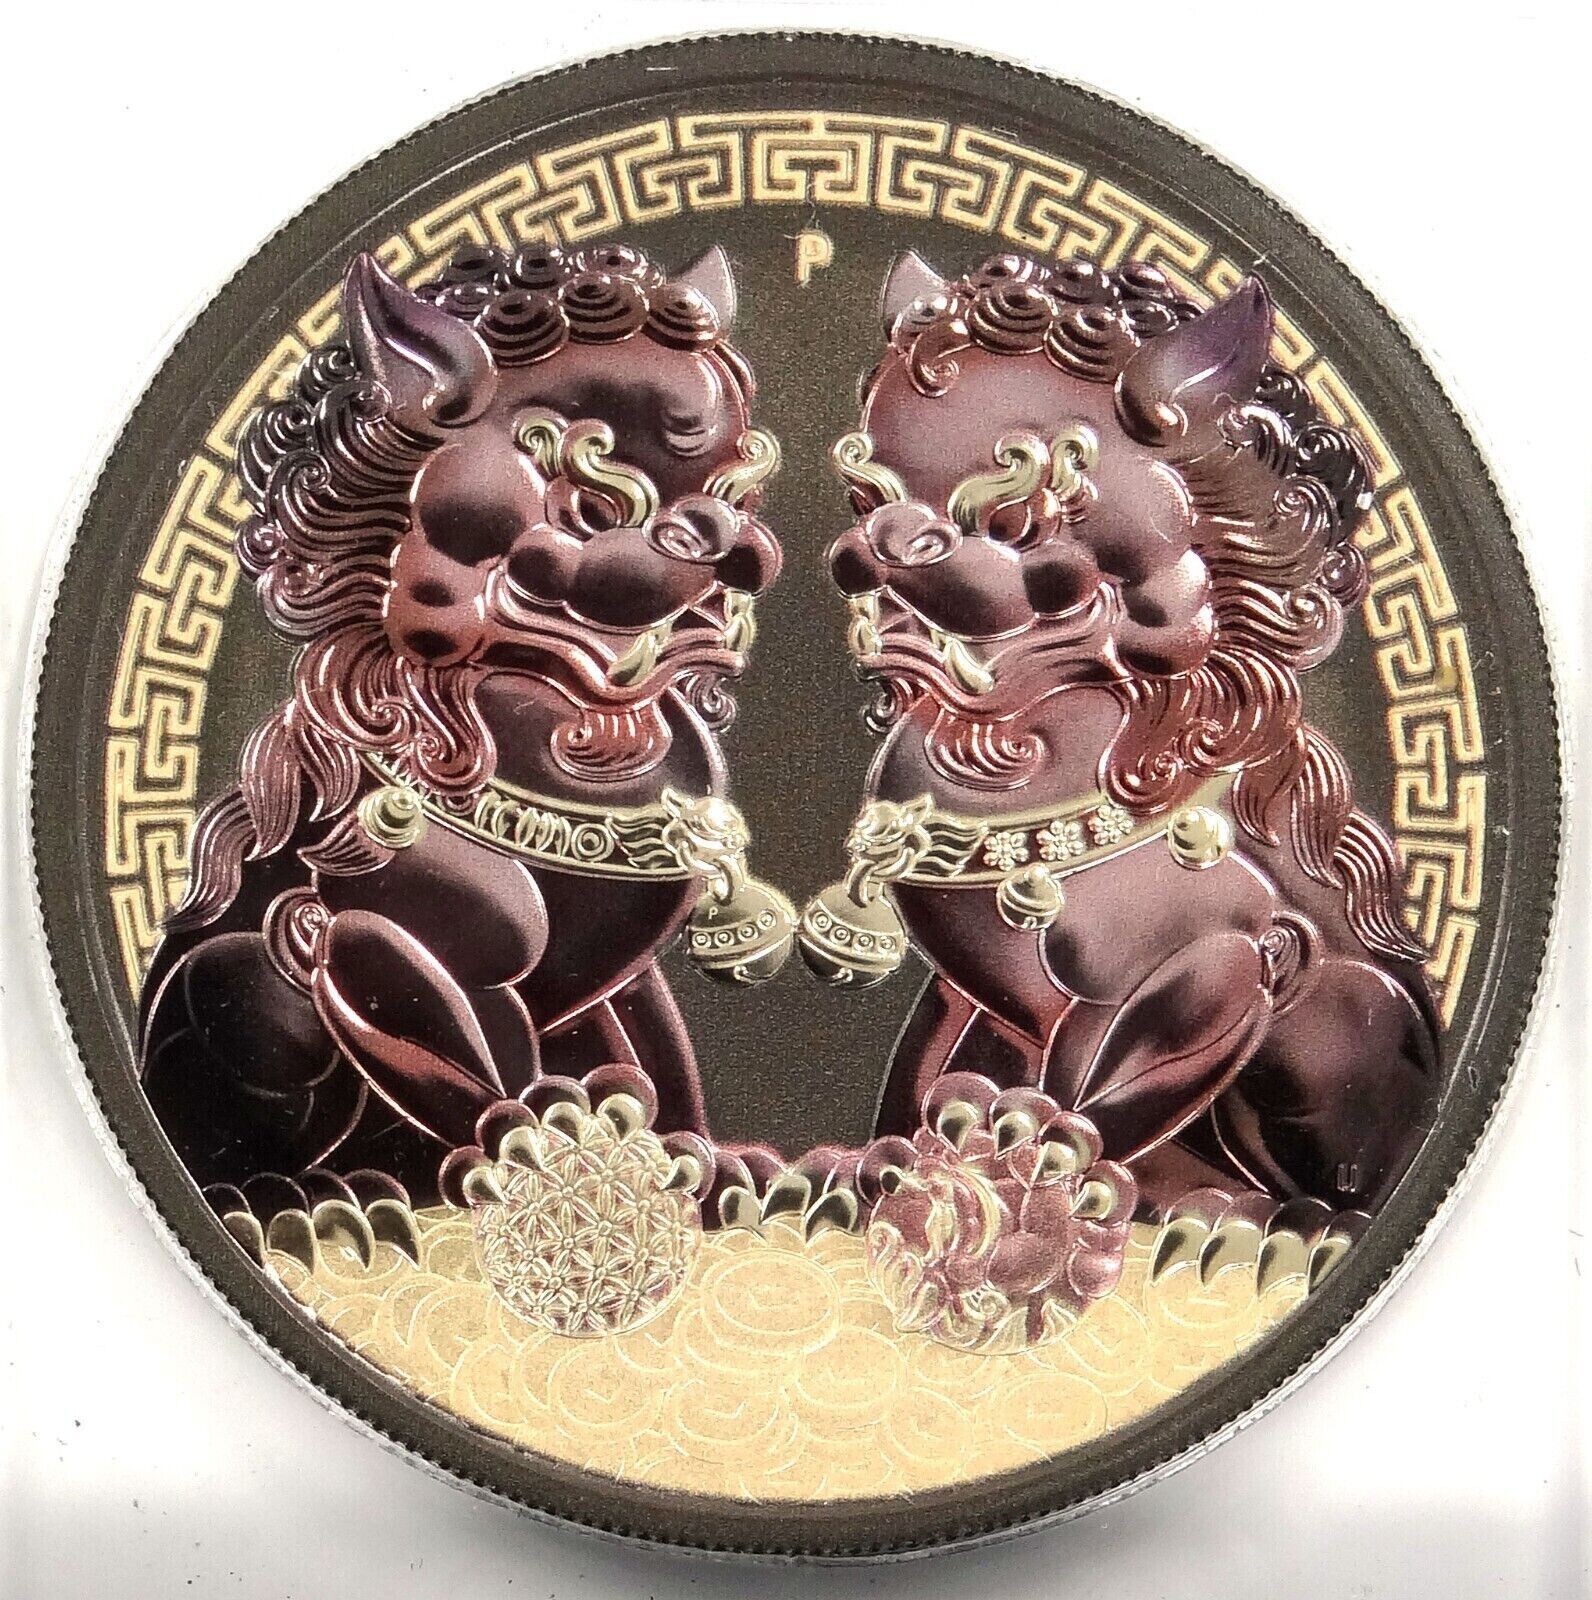 1 Oz Silver Coin 2020 $1 Australia Guardian Sky Lions Pixiu - Dark Red & Gilded-classypw.com-1